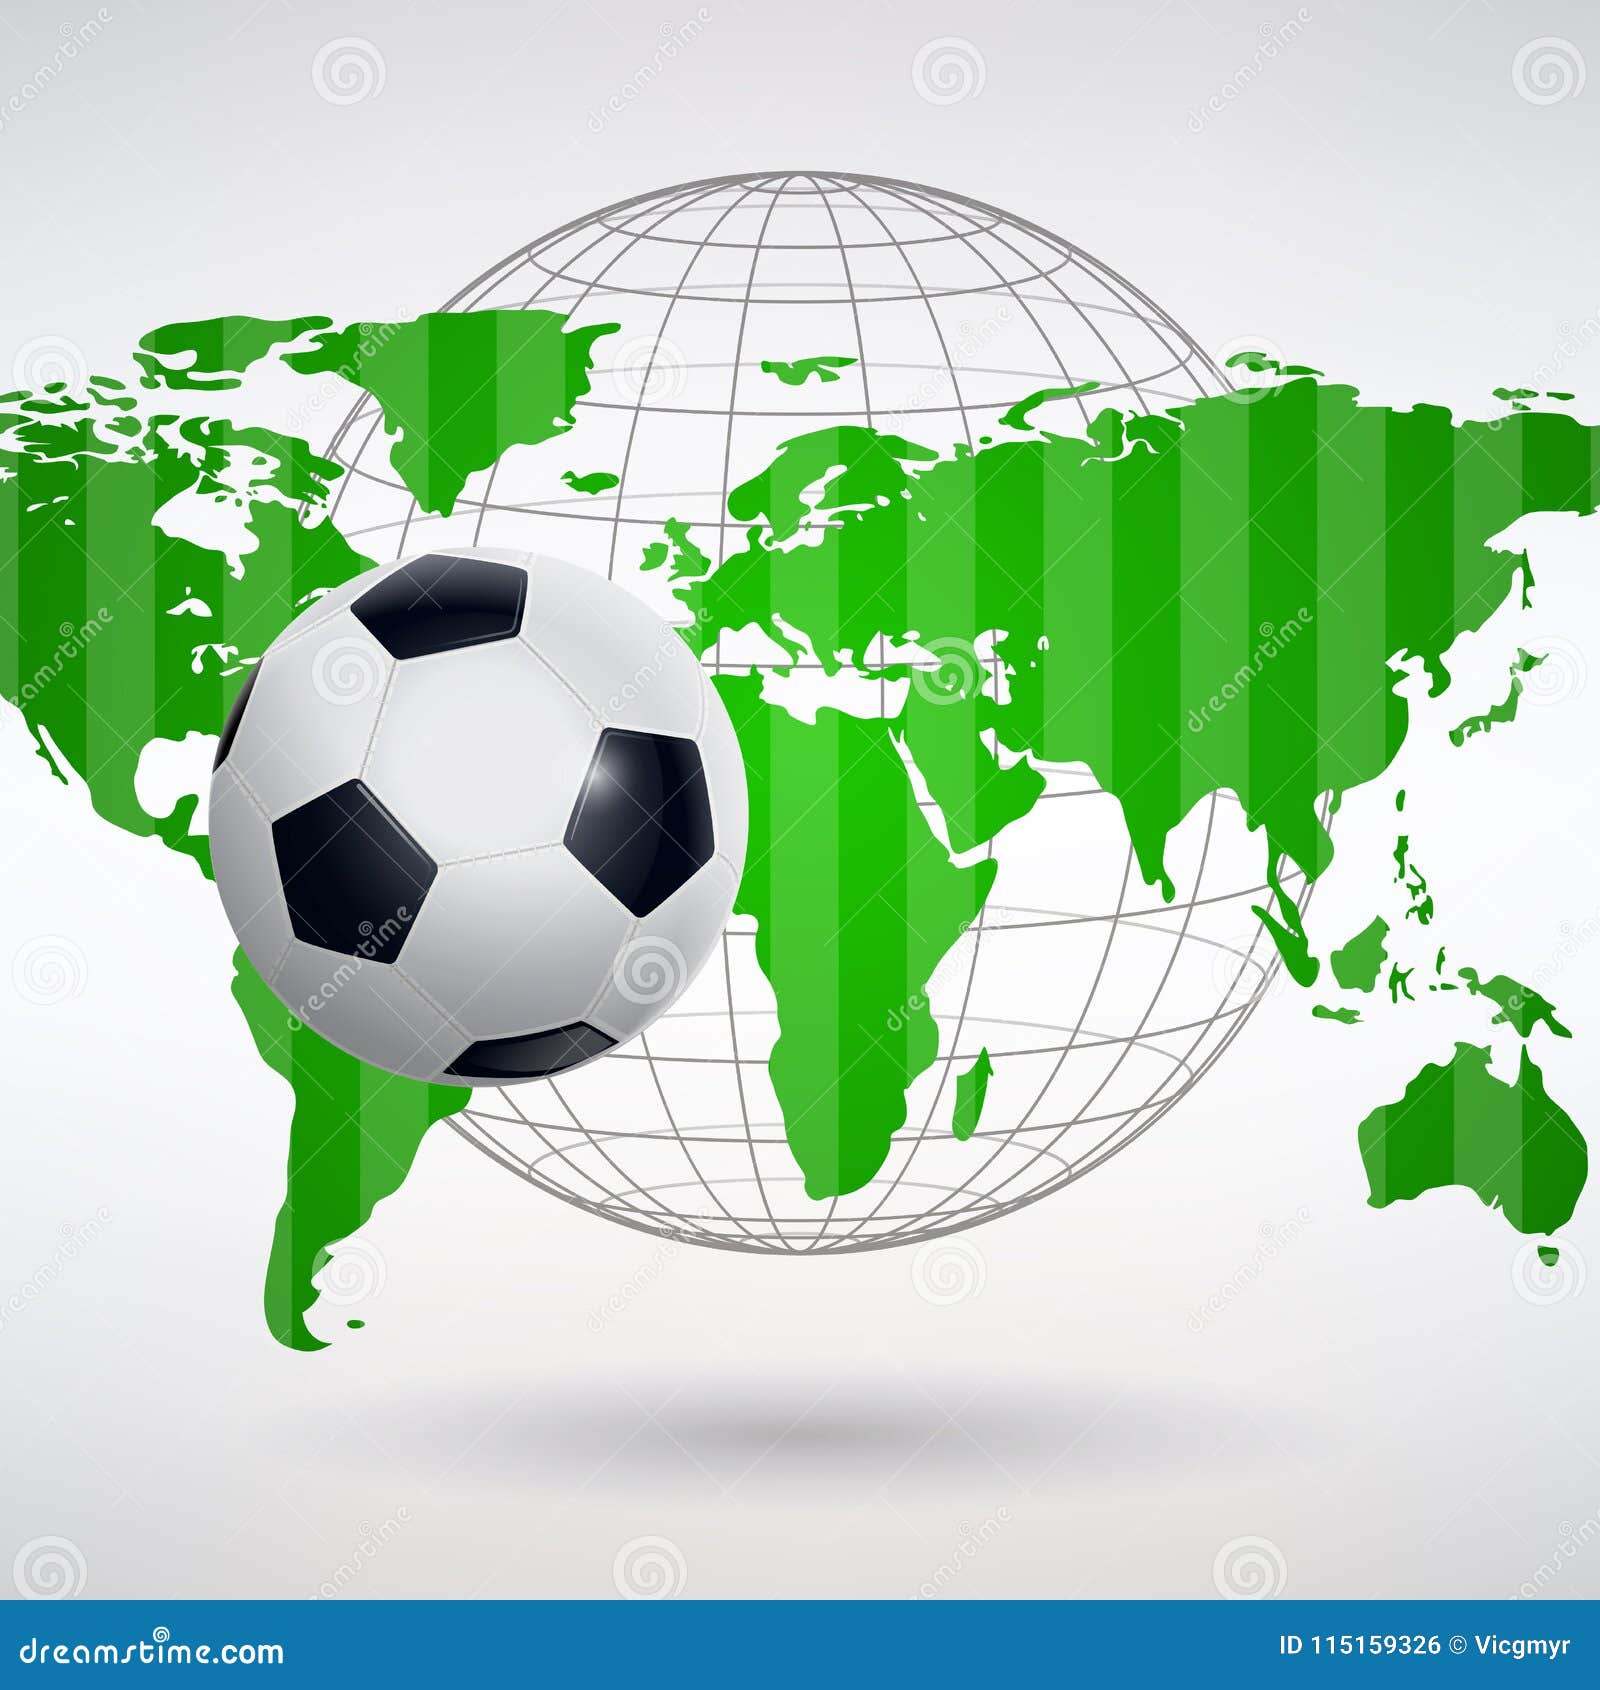 mapa-múndi de bola de futebol no fundo da tv 4607888 Vetor no Vecteezy